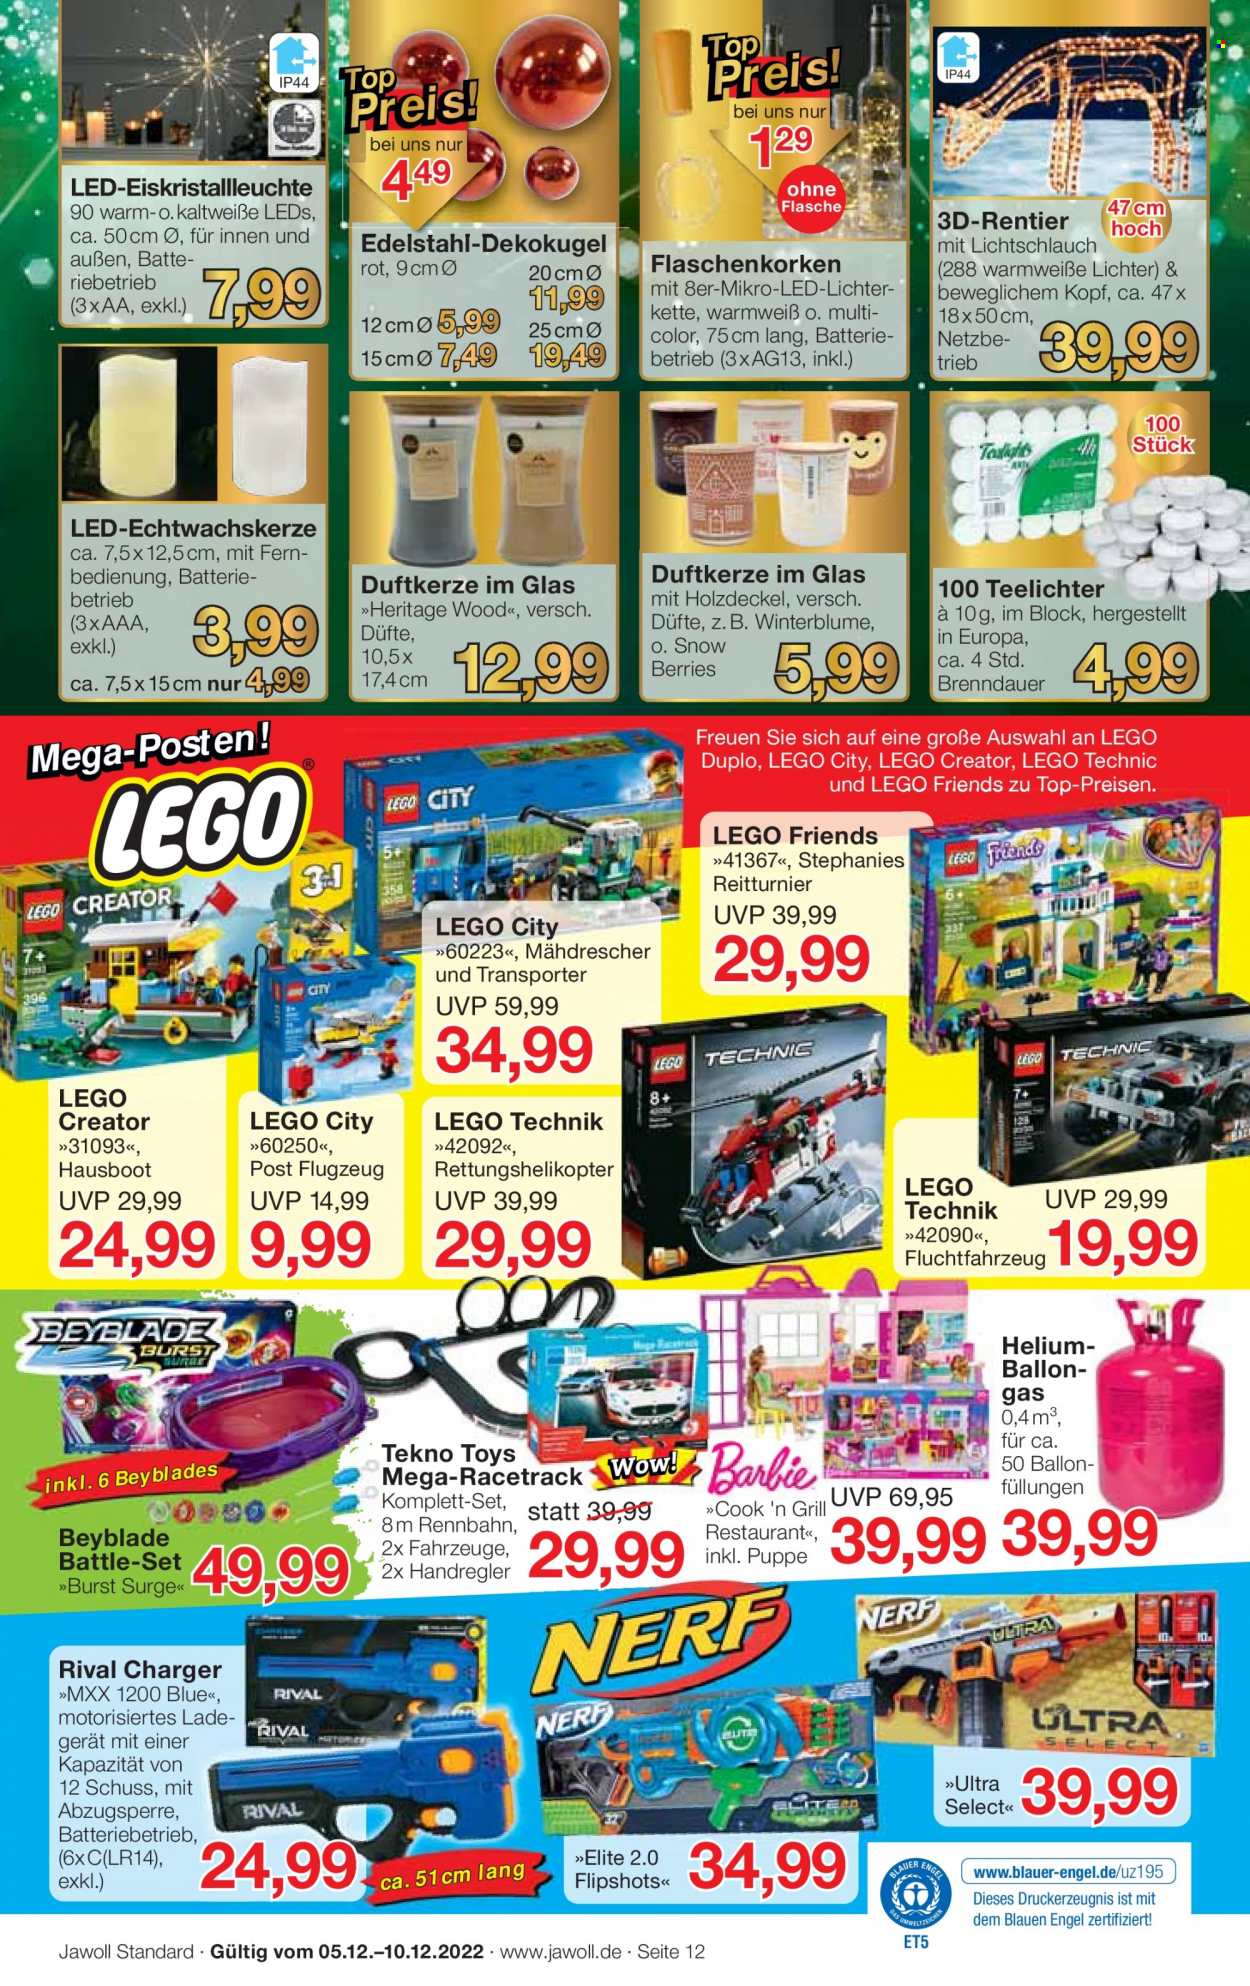 thumbnail - Prospekte Jawoll - 5.12.2022 - 10.12.2022 - Produkte in Aktion - Duftkerze, Lichterkette, Engel, LEGO Technic, Puppe, LEGO City, LEGO Creator, LEGO Duplo, LEGO Friends, Grill. Seite 16.